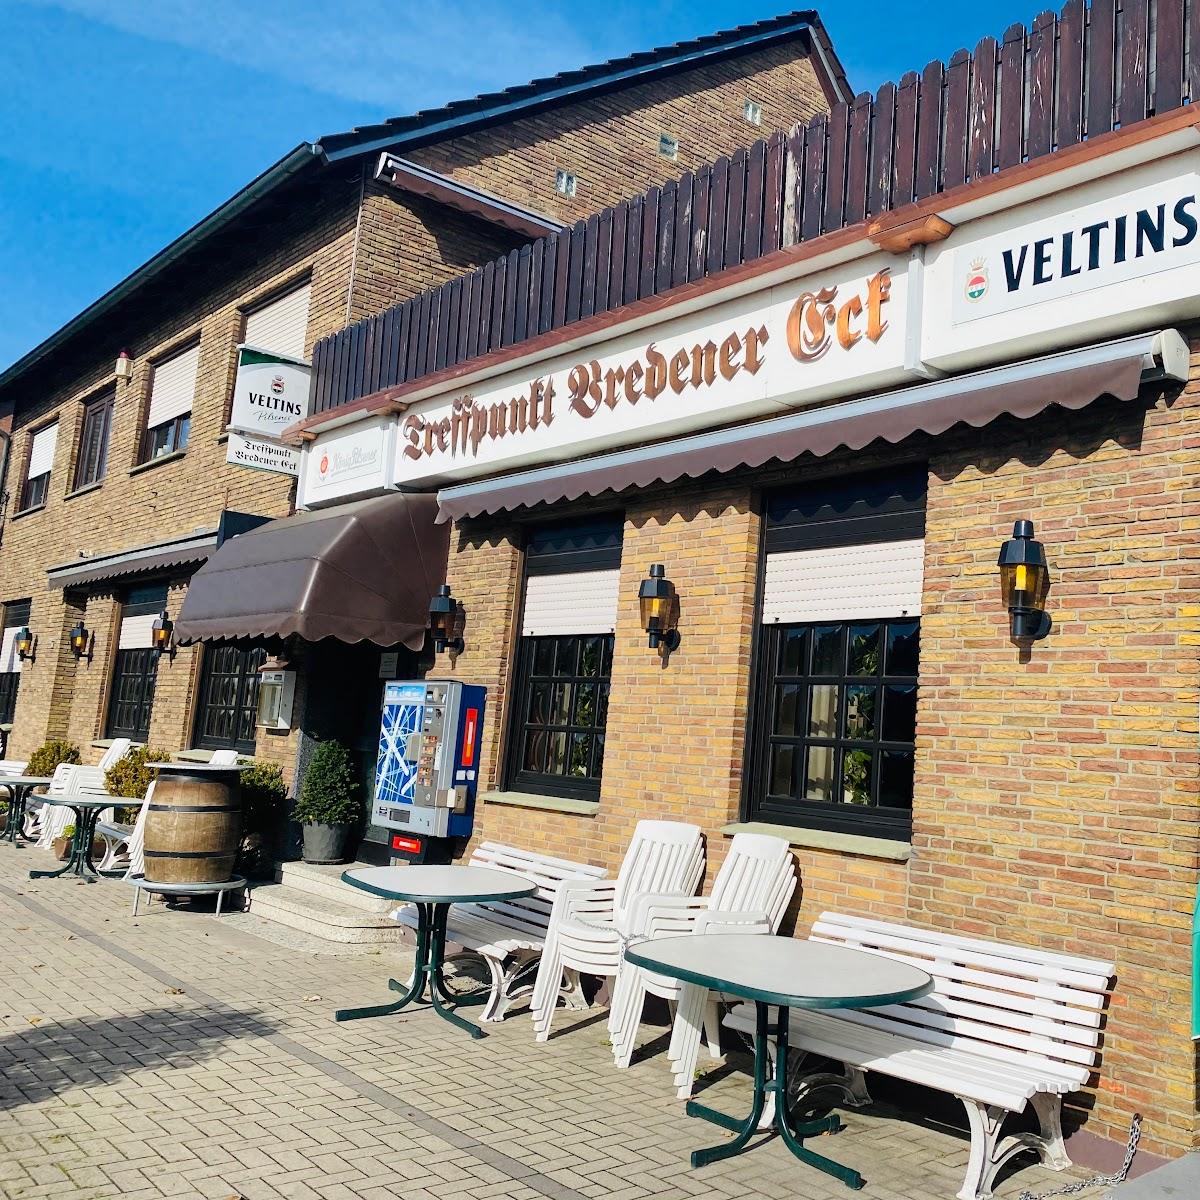 Restaurant "Treffpunkt er Eck" in Vreden